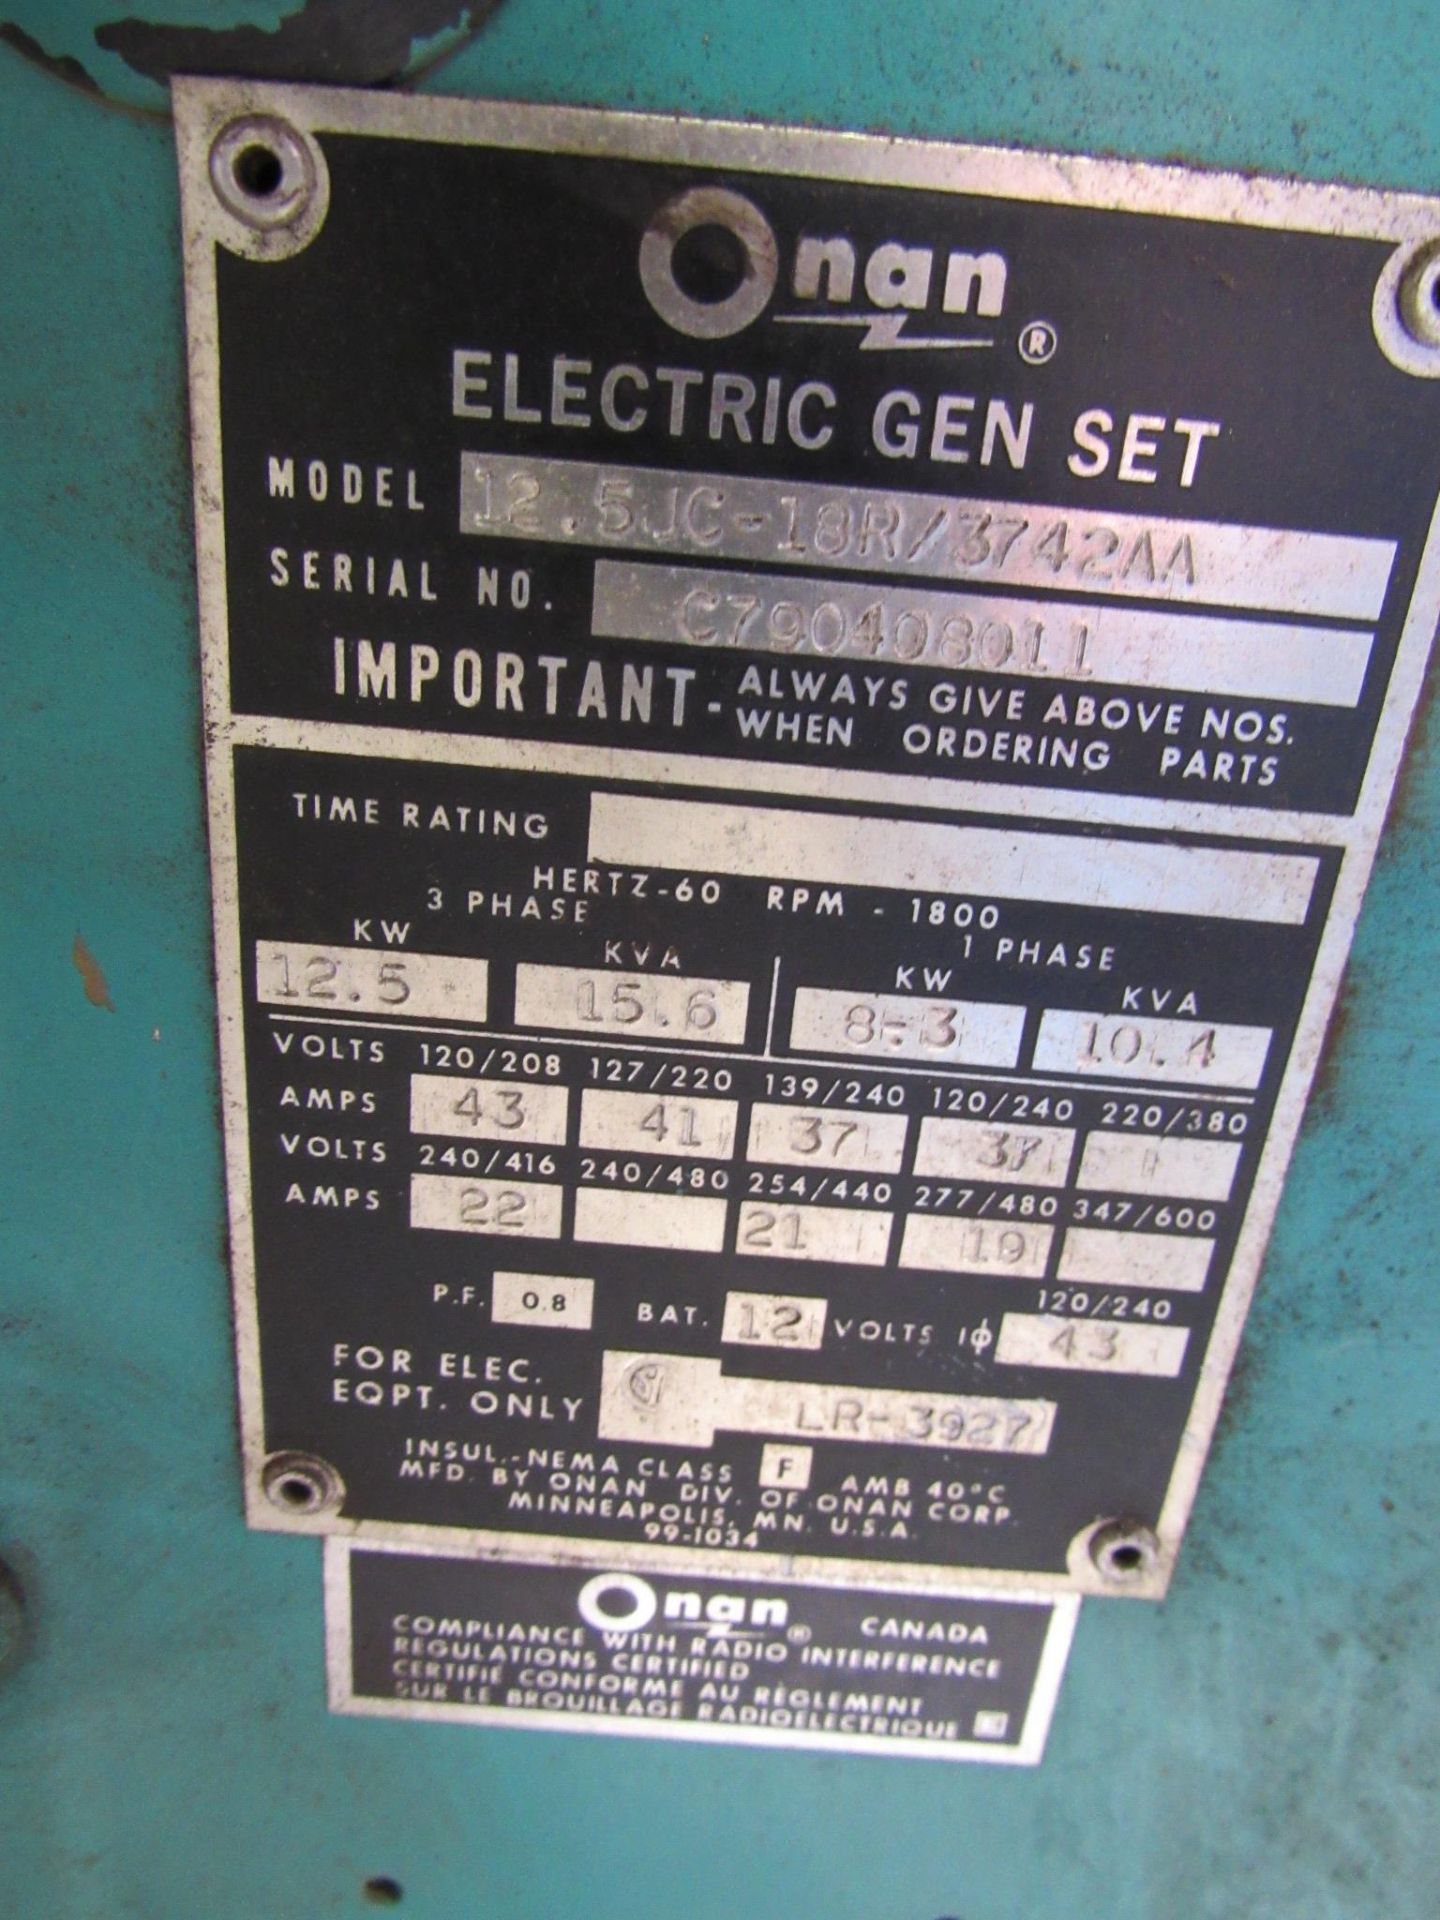 Onan Generator, Model 12.5JC-18R/3742AA - Image 4 of 5